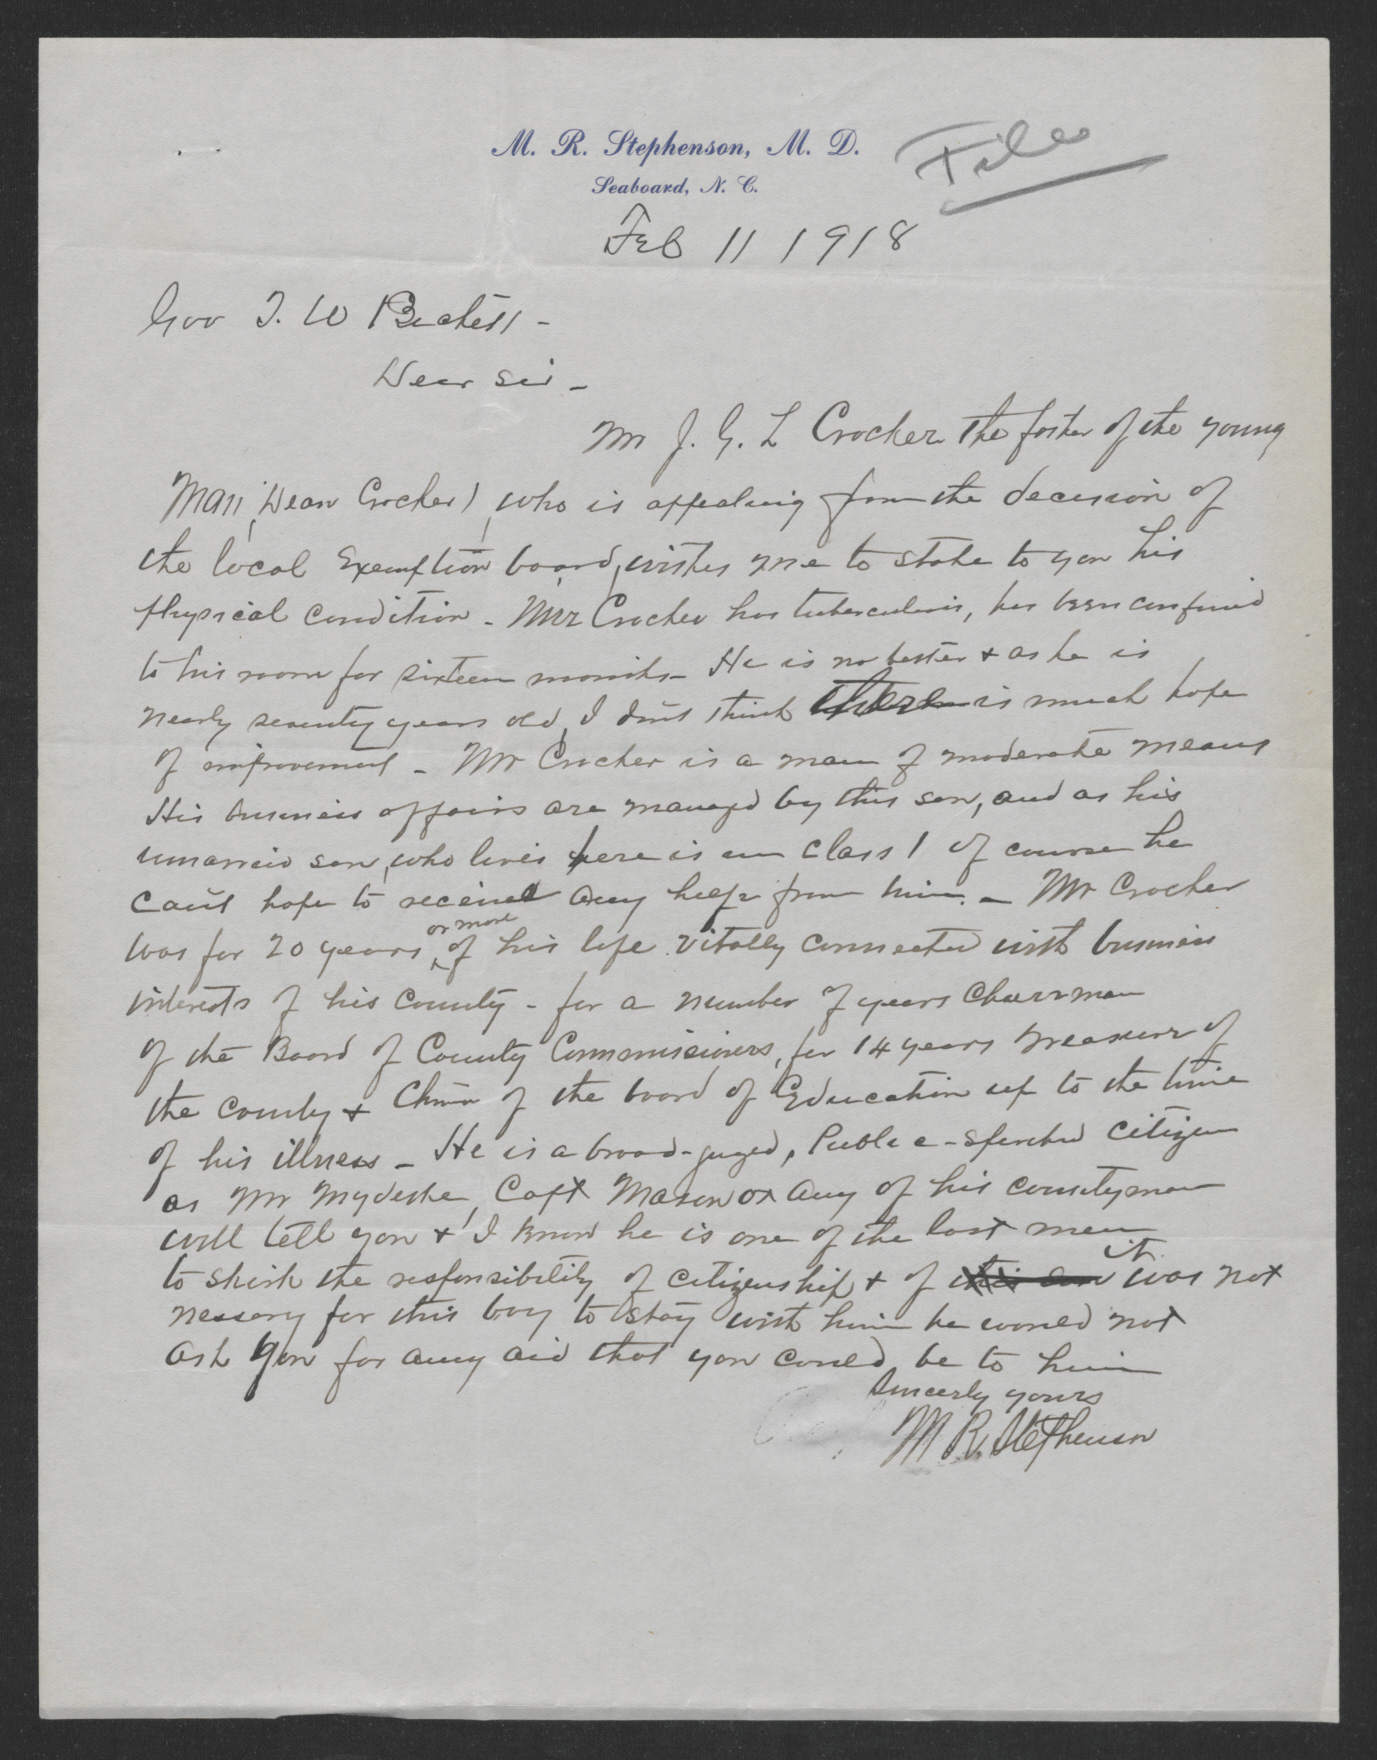 Letter from Matt R. Stephenson to Thomas W. Bickett, February 11, 1918